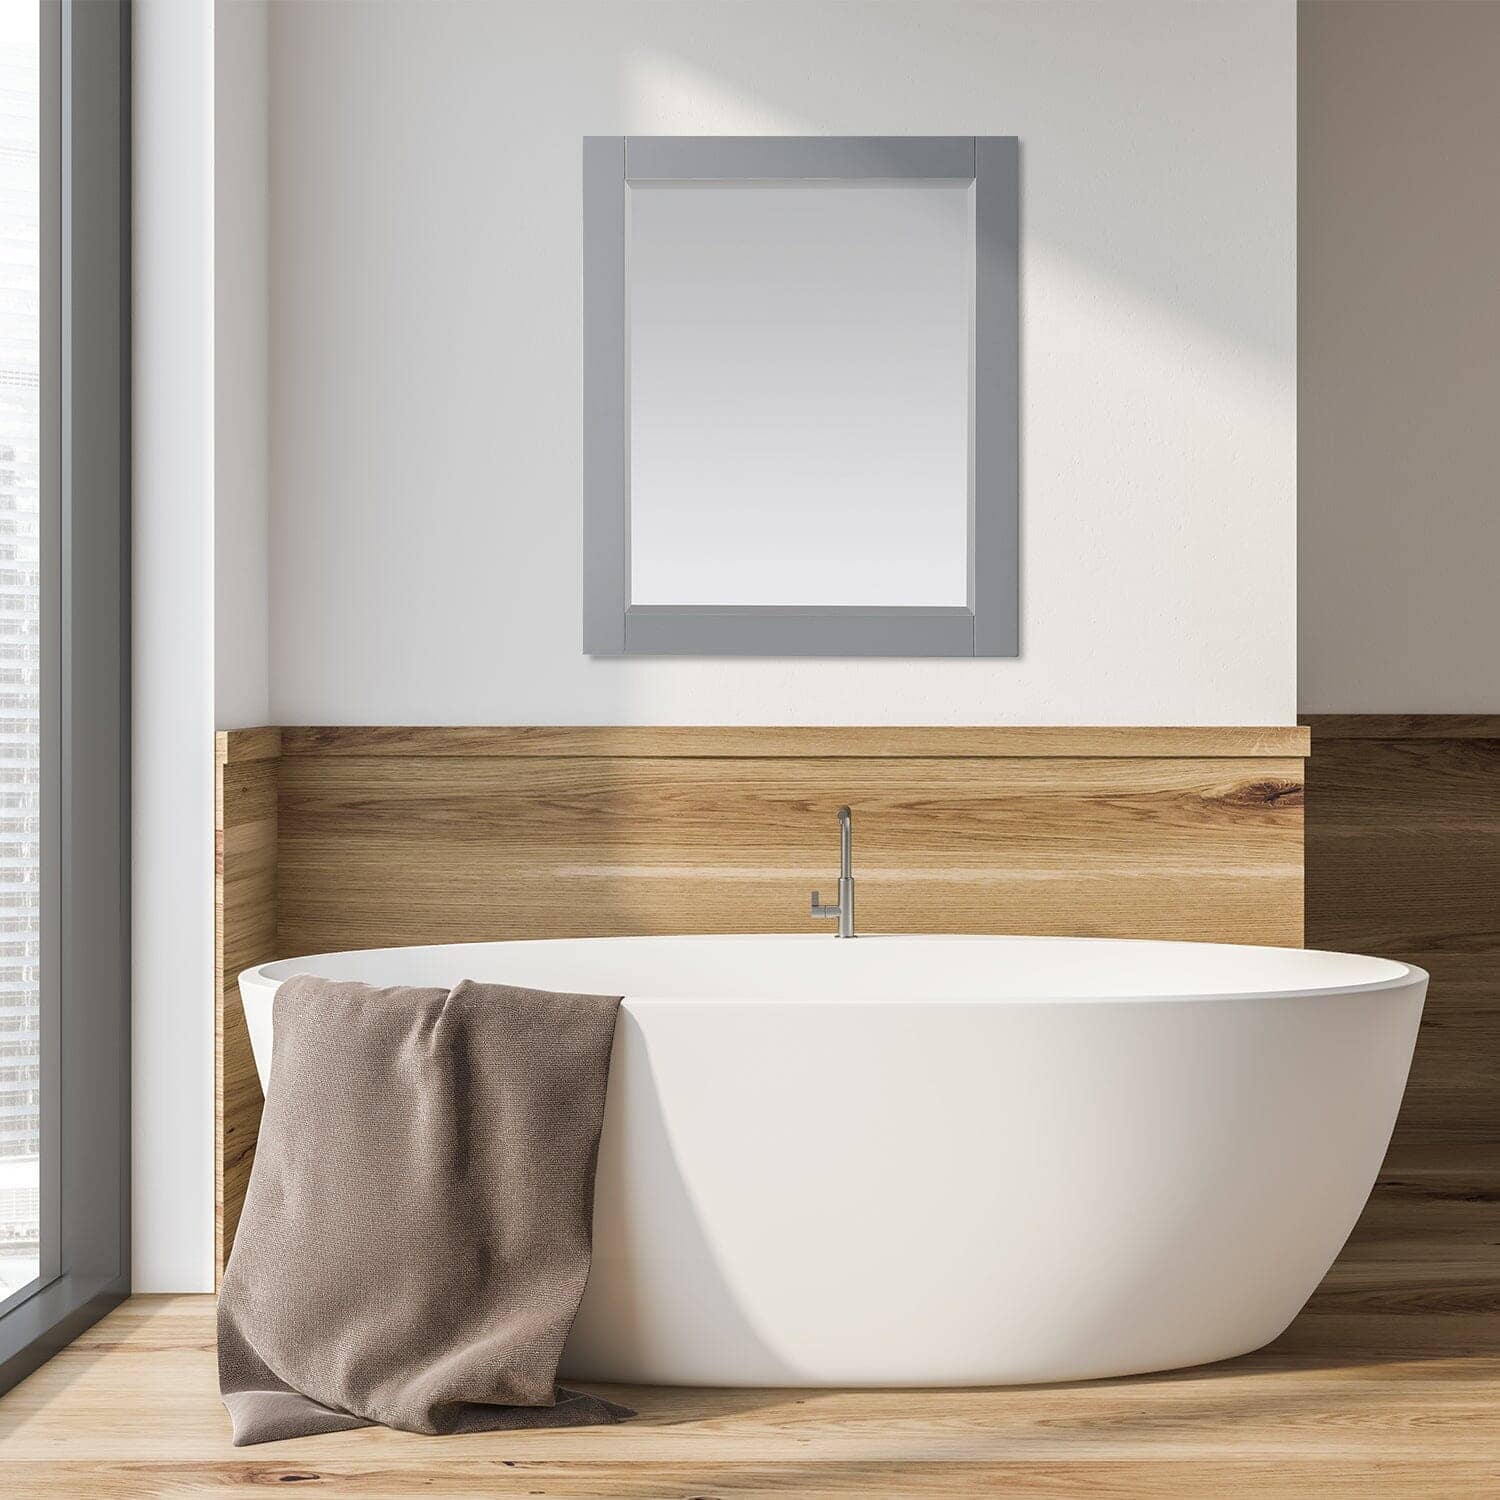 Bathroom Mirror - Altair Maribella 28W x 36H -535030-MIR-GR